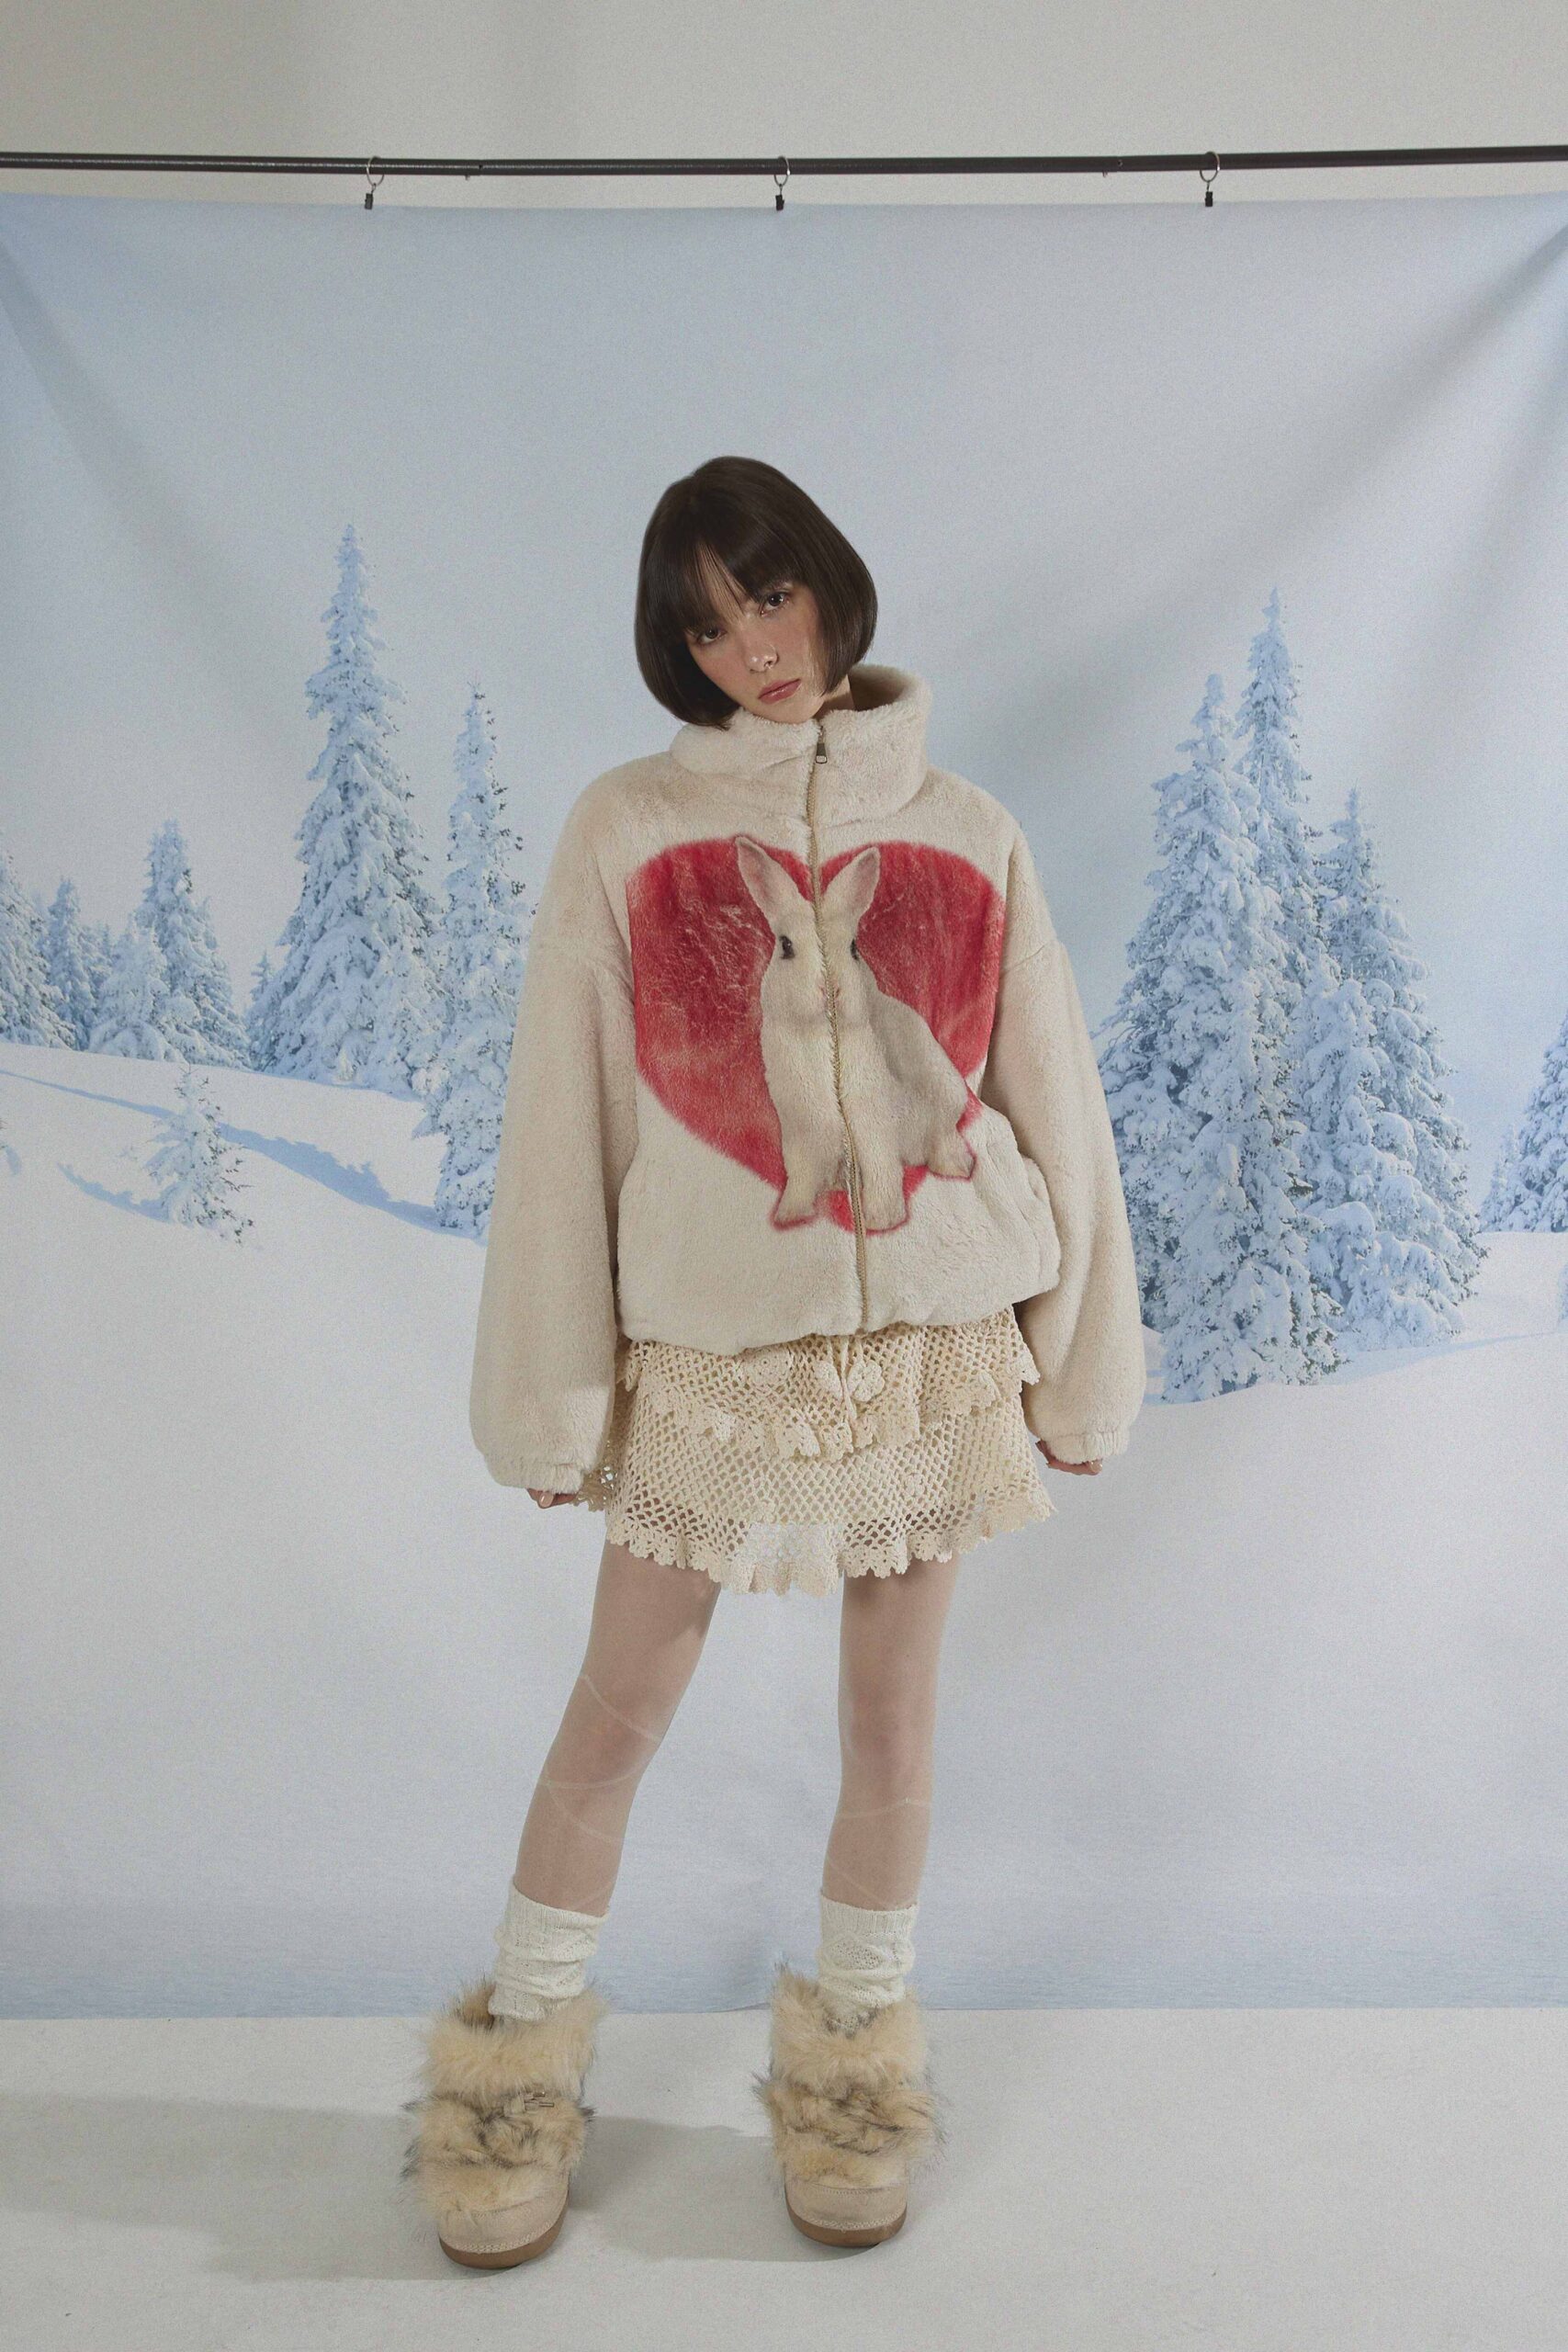 Fur Jackets Make Your Winter Elegantly
  Warm